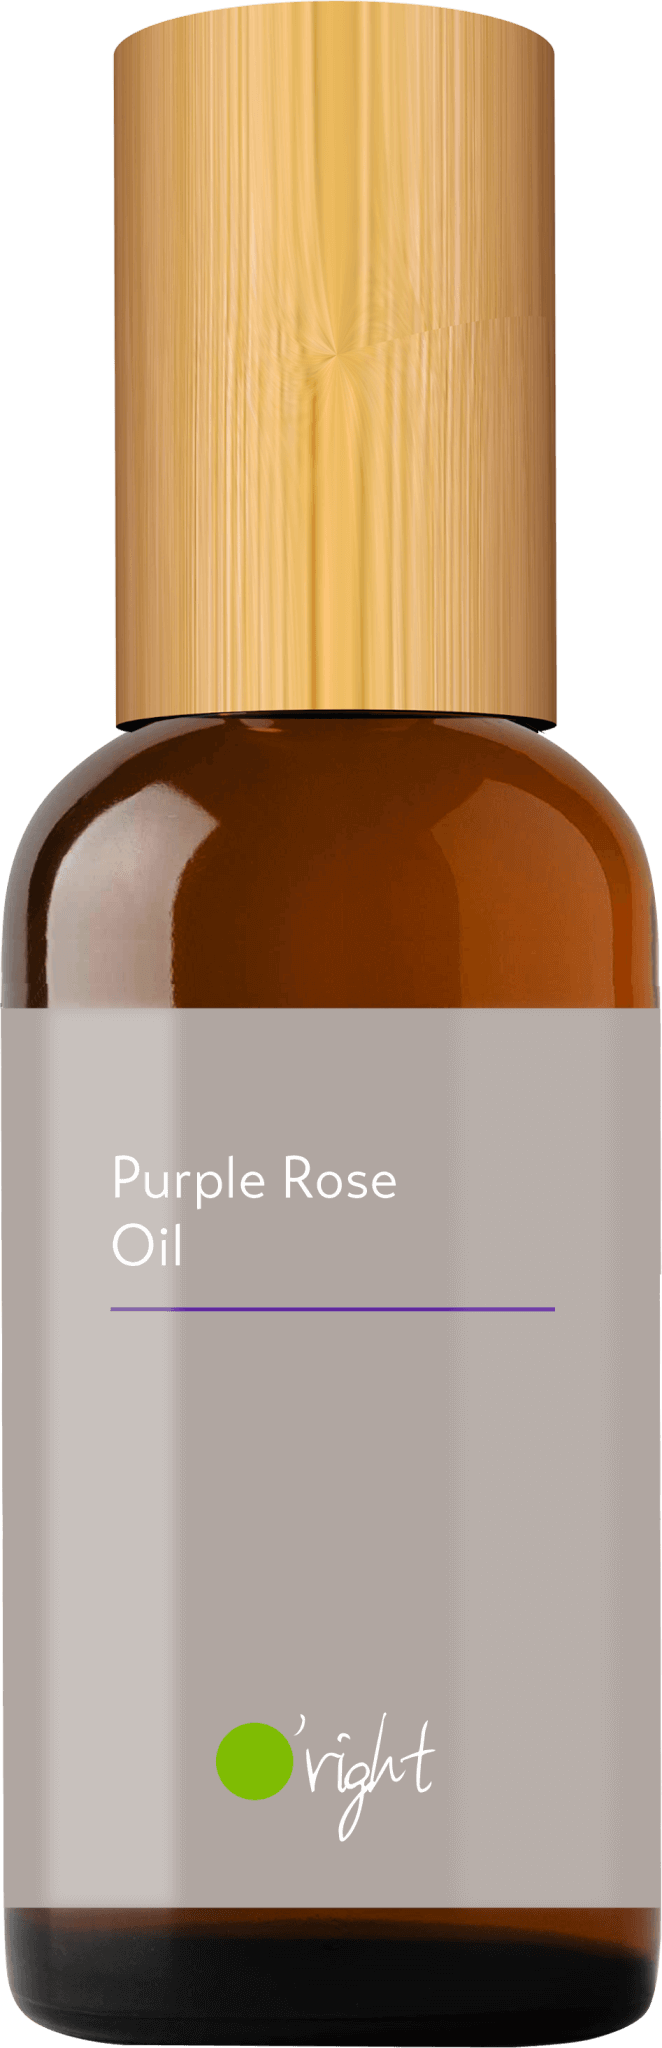 Purple Rose Oil 100mL 2021